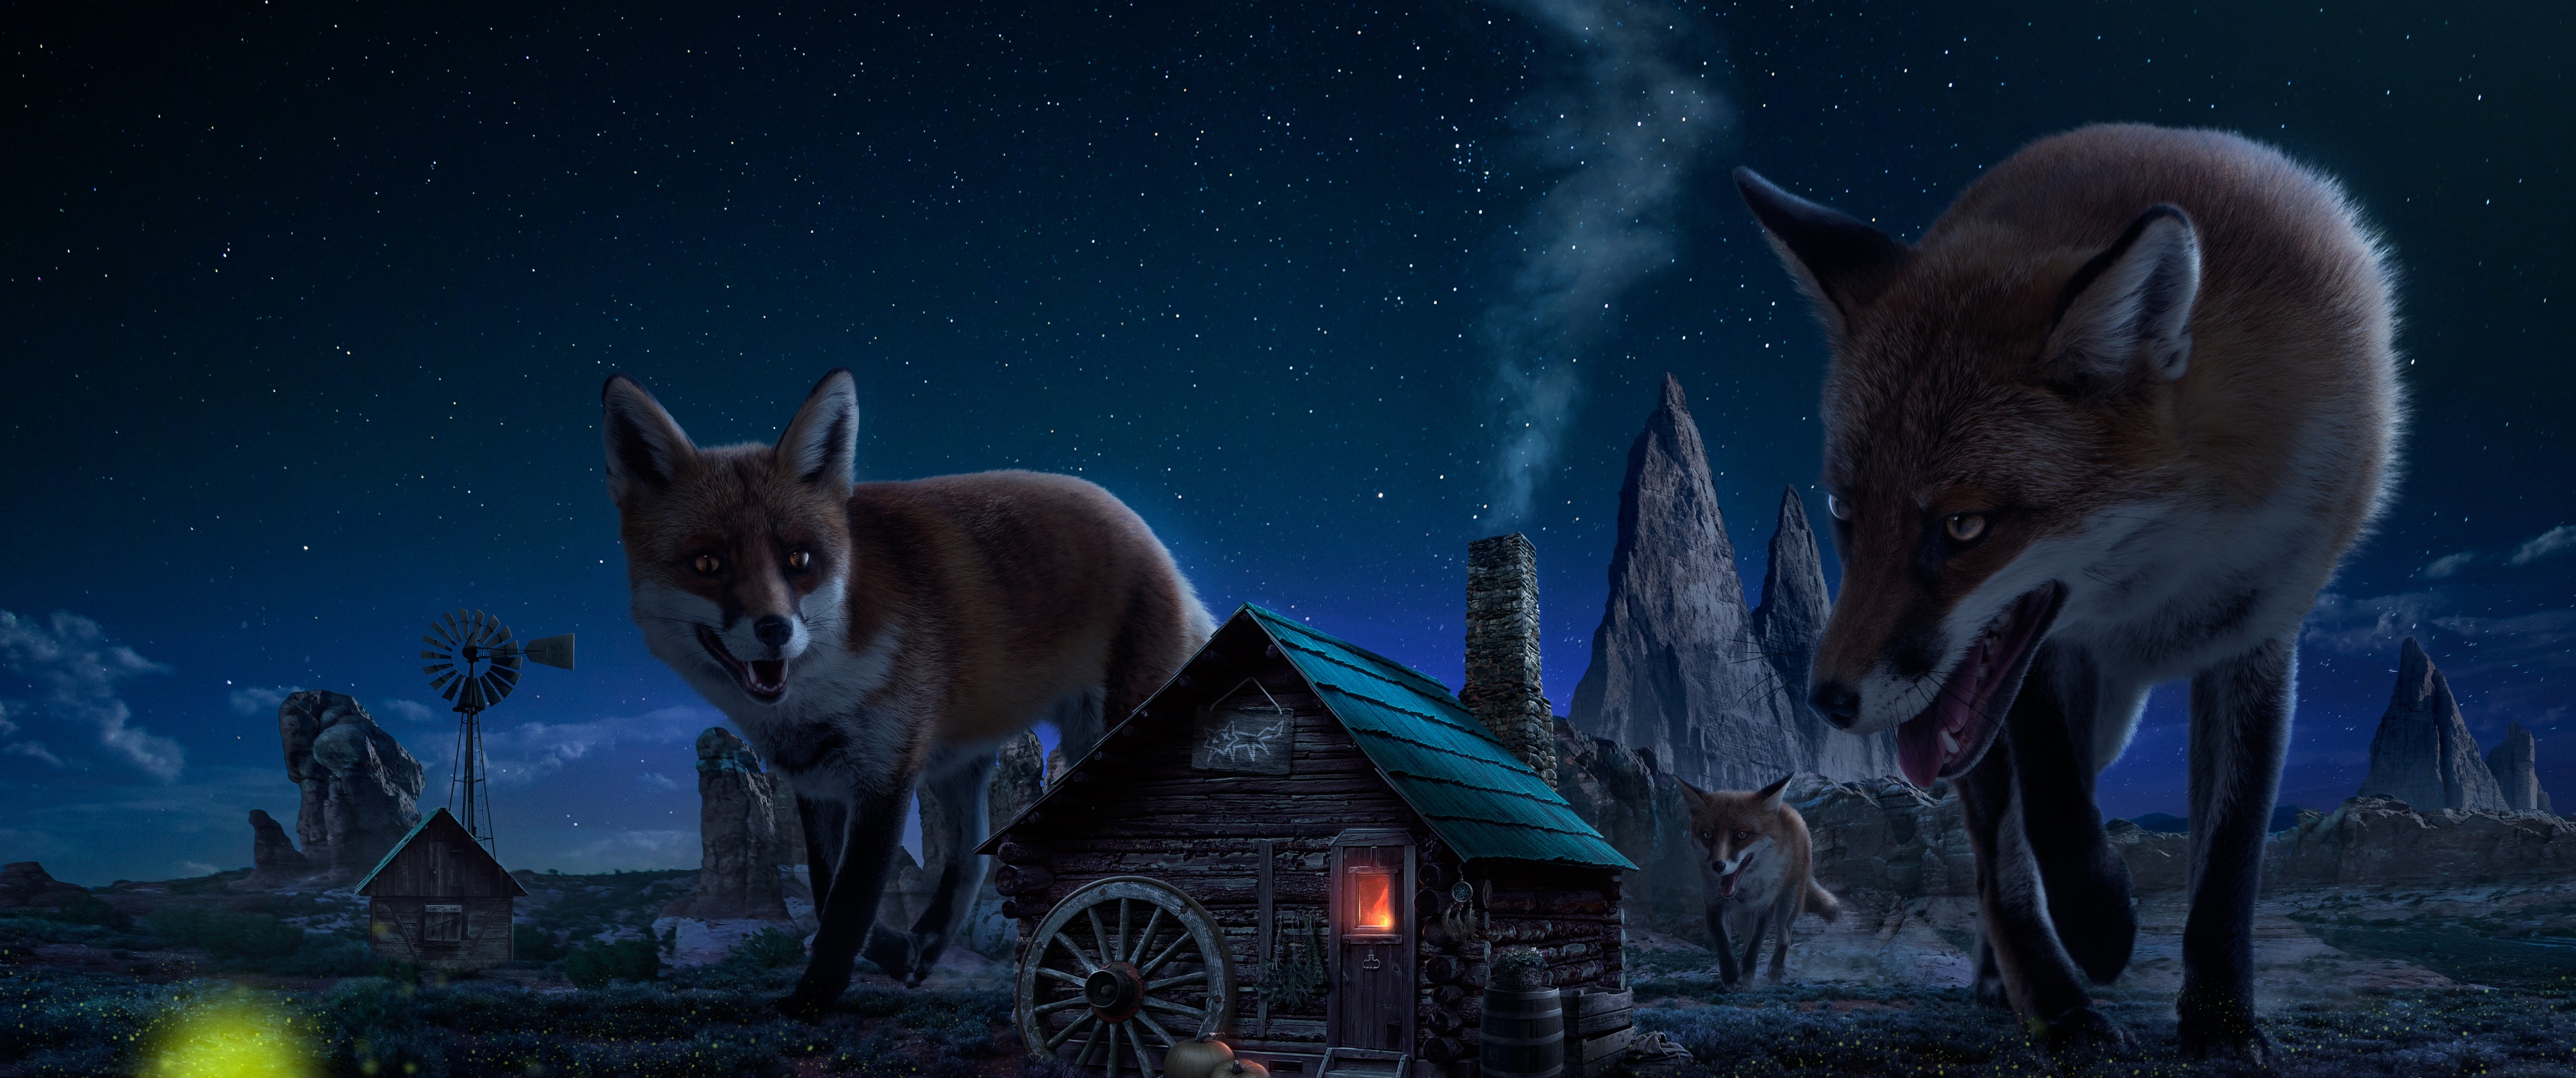 Witch House Wallpaper 4K, Fox, Wild animals, Starry sky, Twilight, Fantasy